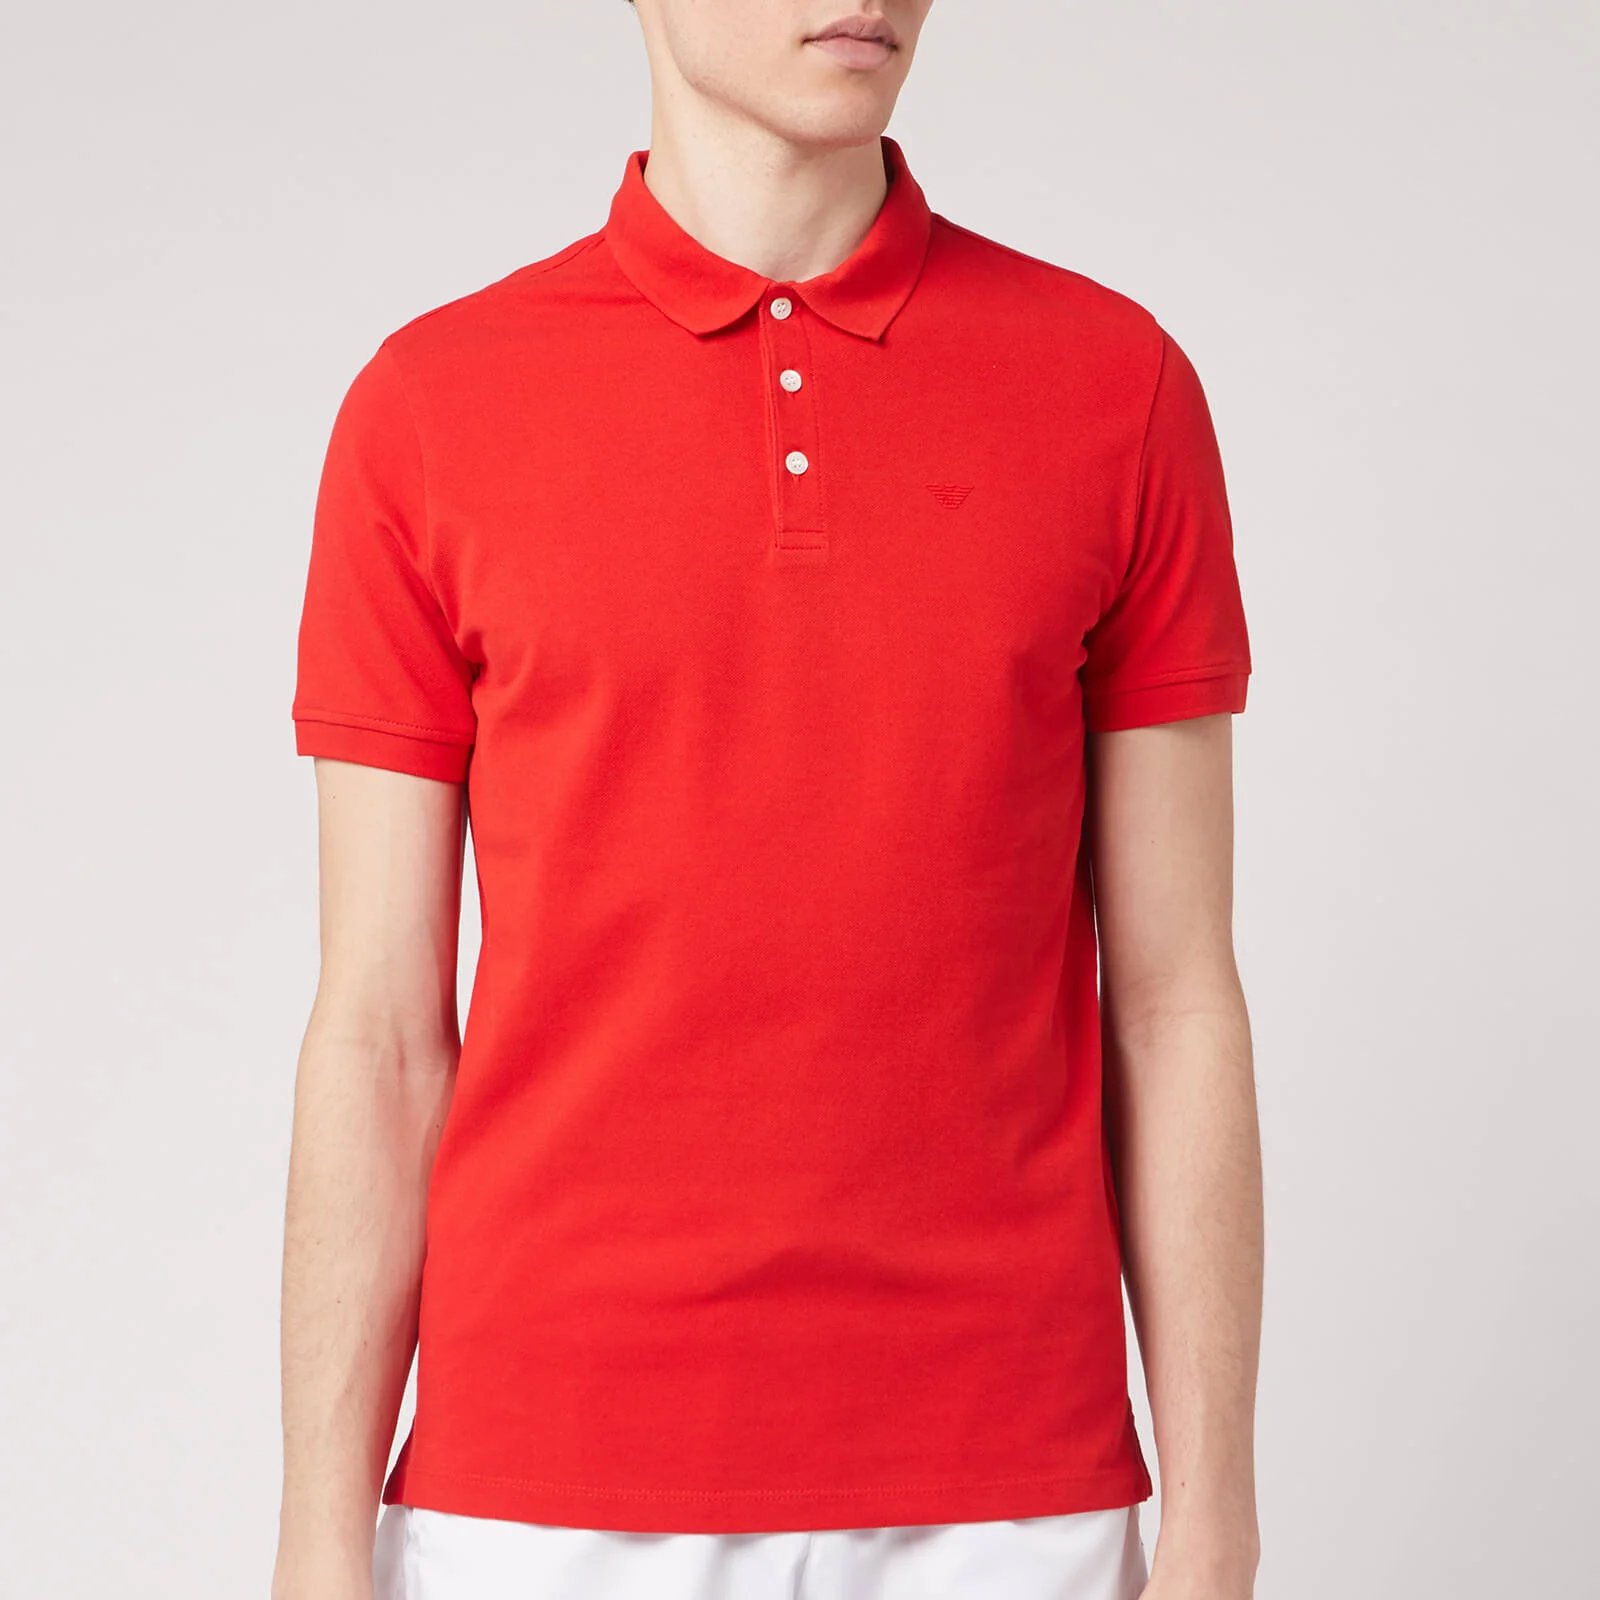 Emporio Armani Men's Basic Polo Shirt - Red Image 1